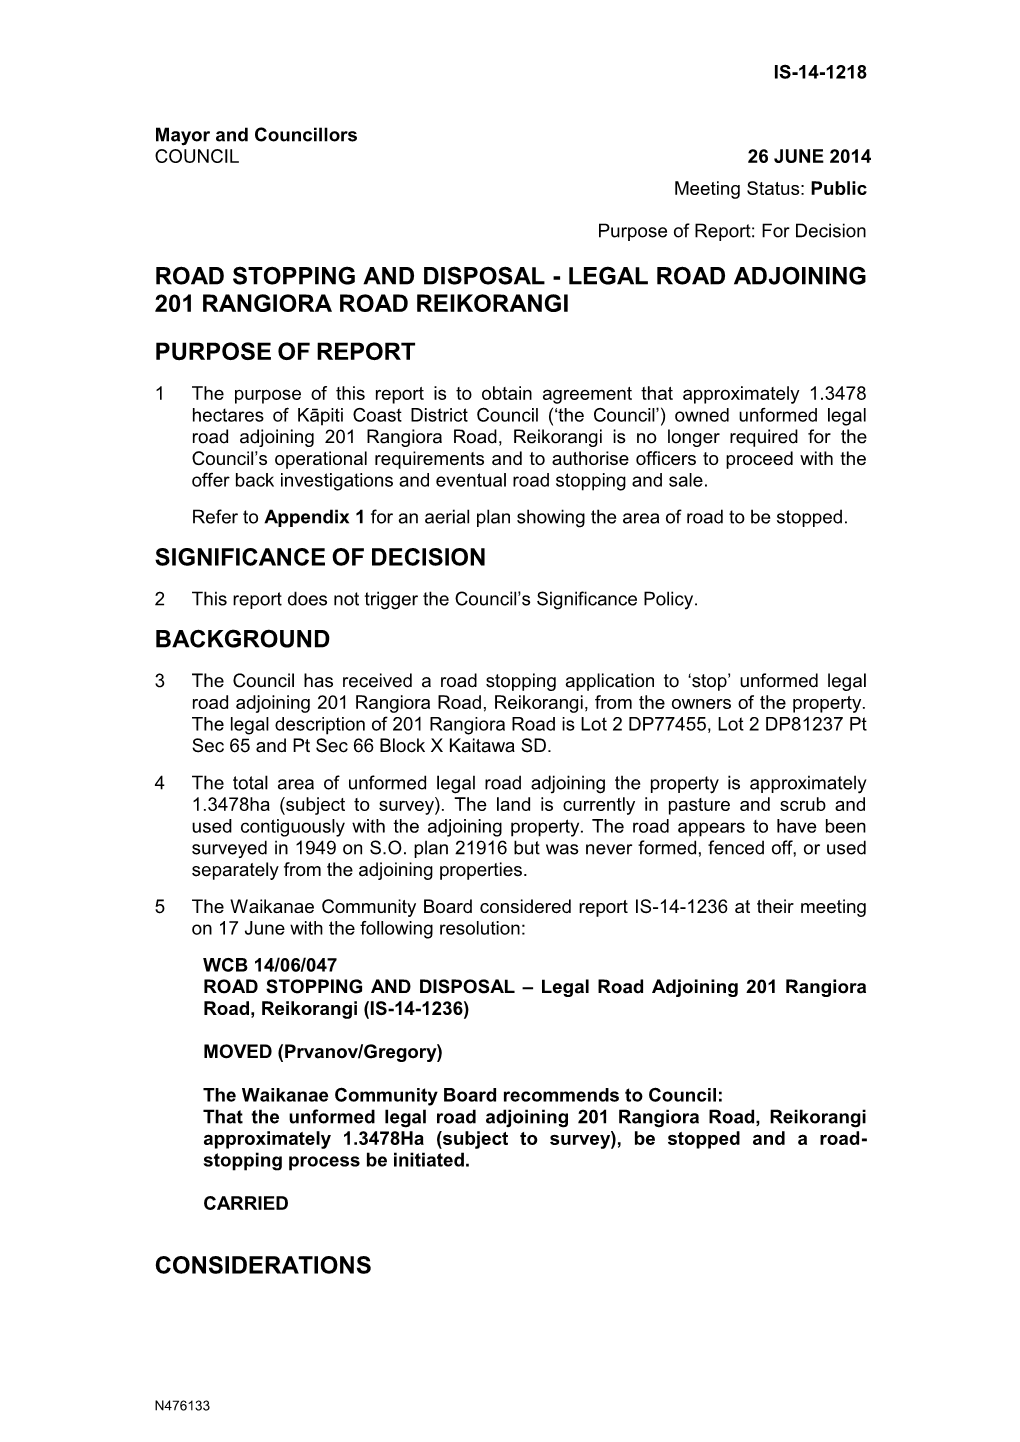 Road Stopping and Disposal - Legal Road Adjoining 201 Rangiora Road Reikorangi